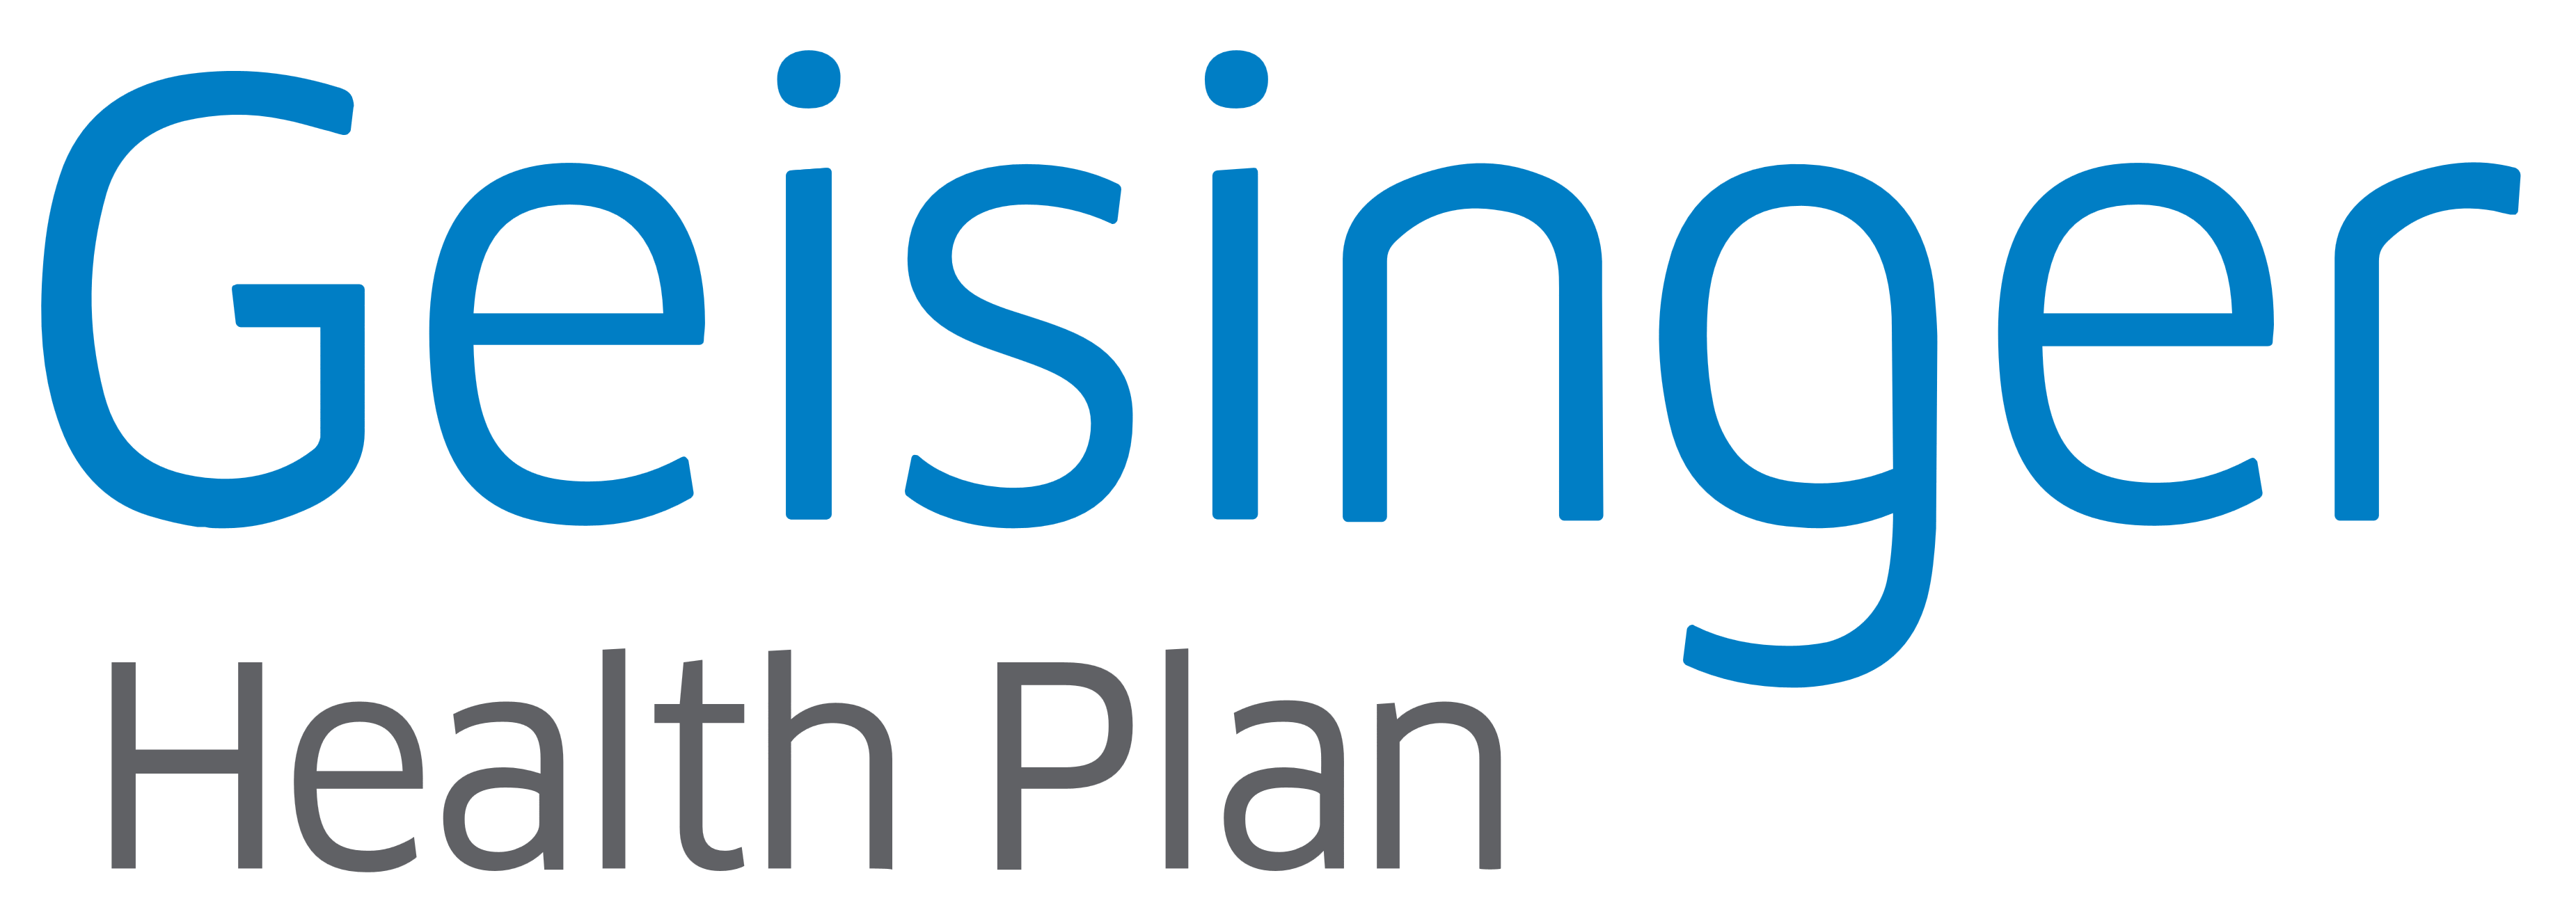 Geisinger_Health_Plan_logo